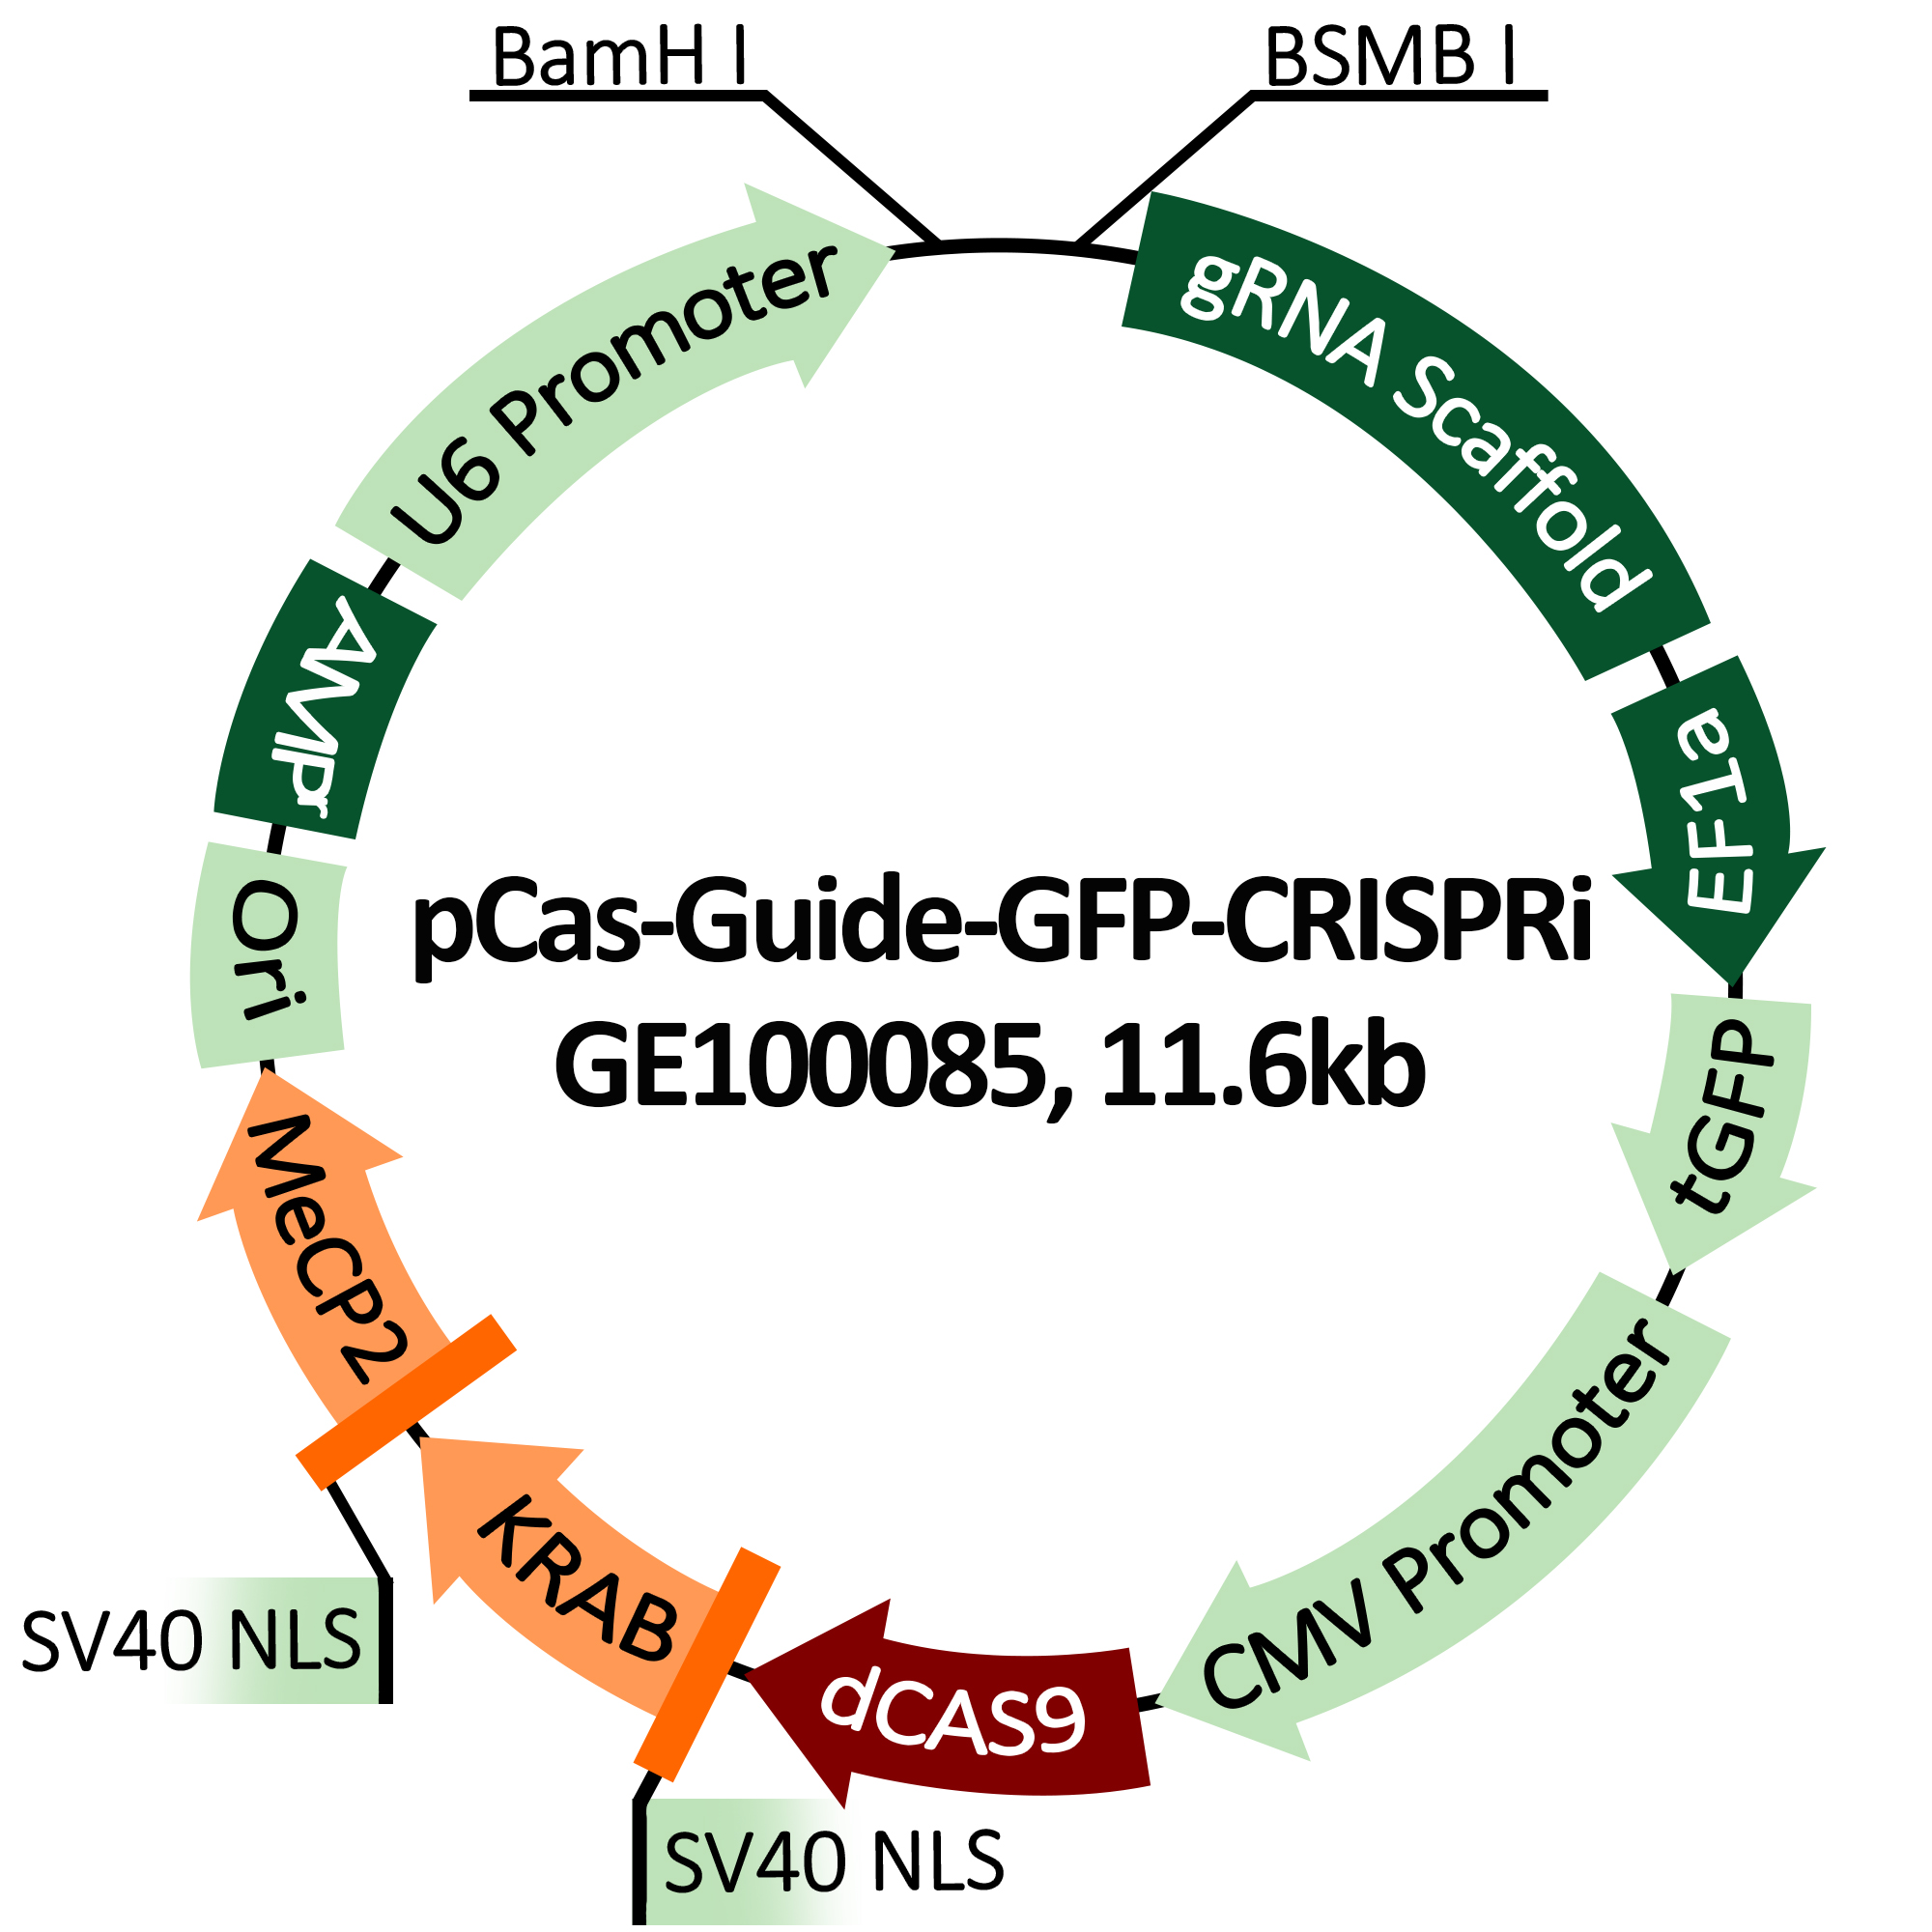 Plasmid map of pCas-Guide-GFP-CRISPRi gene interference vector(GE100085)